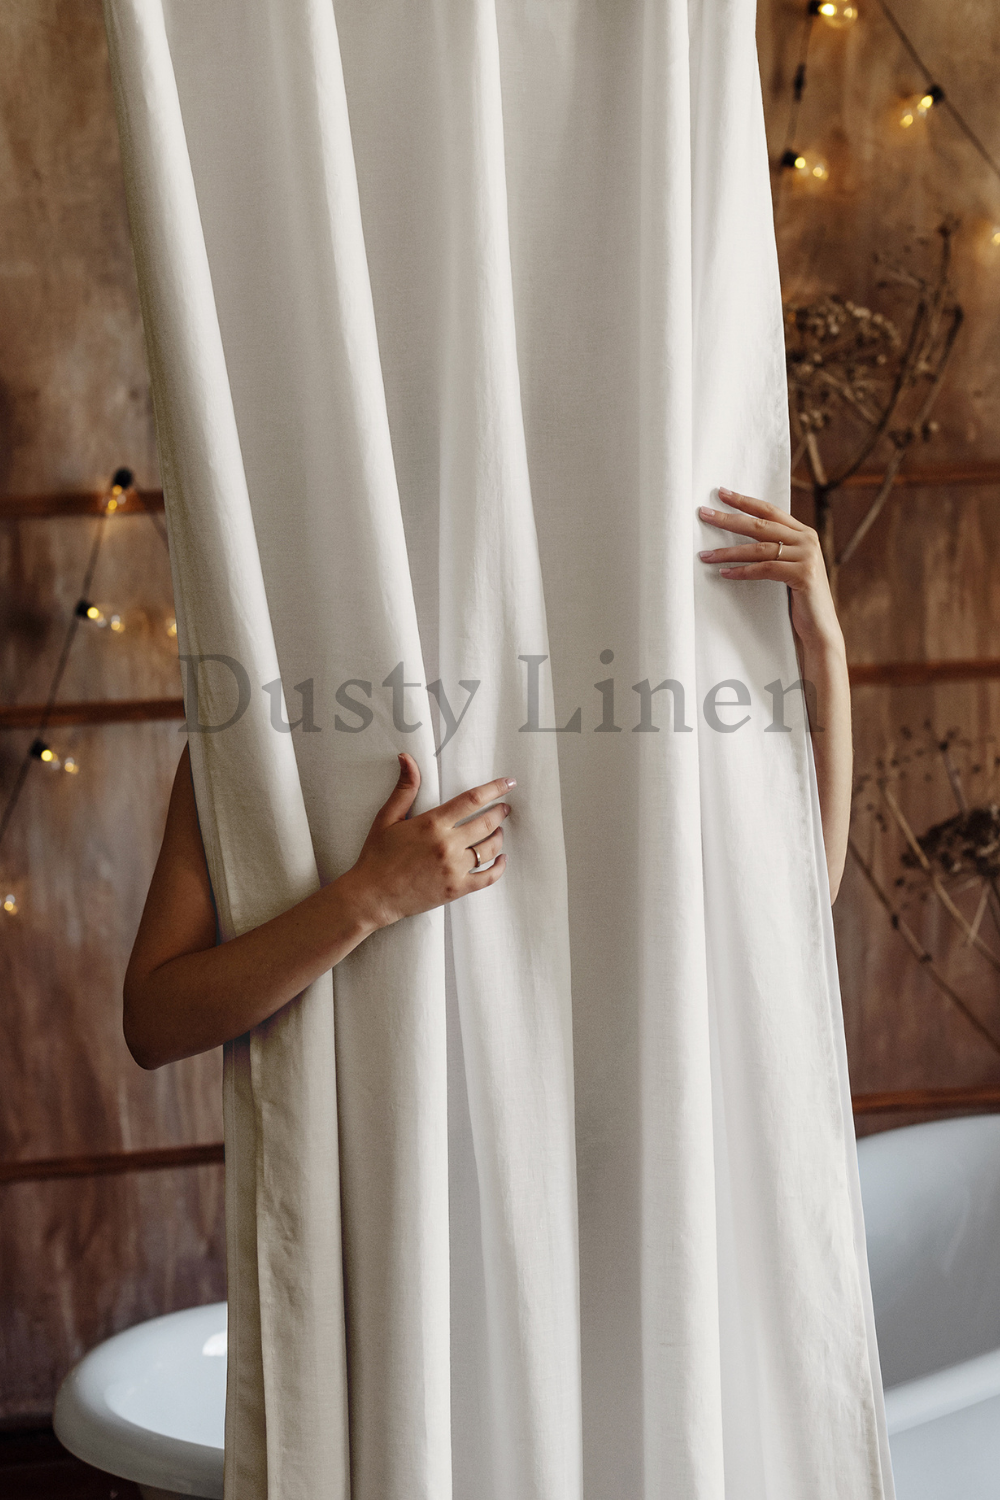 Best housewarming gift - Bathroom decoration with Dusty Linen cream color bathroom shower drape